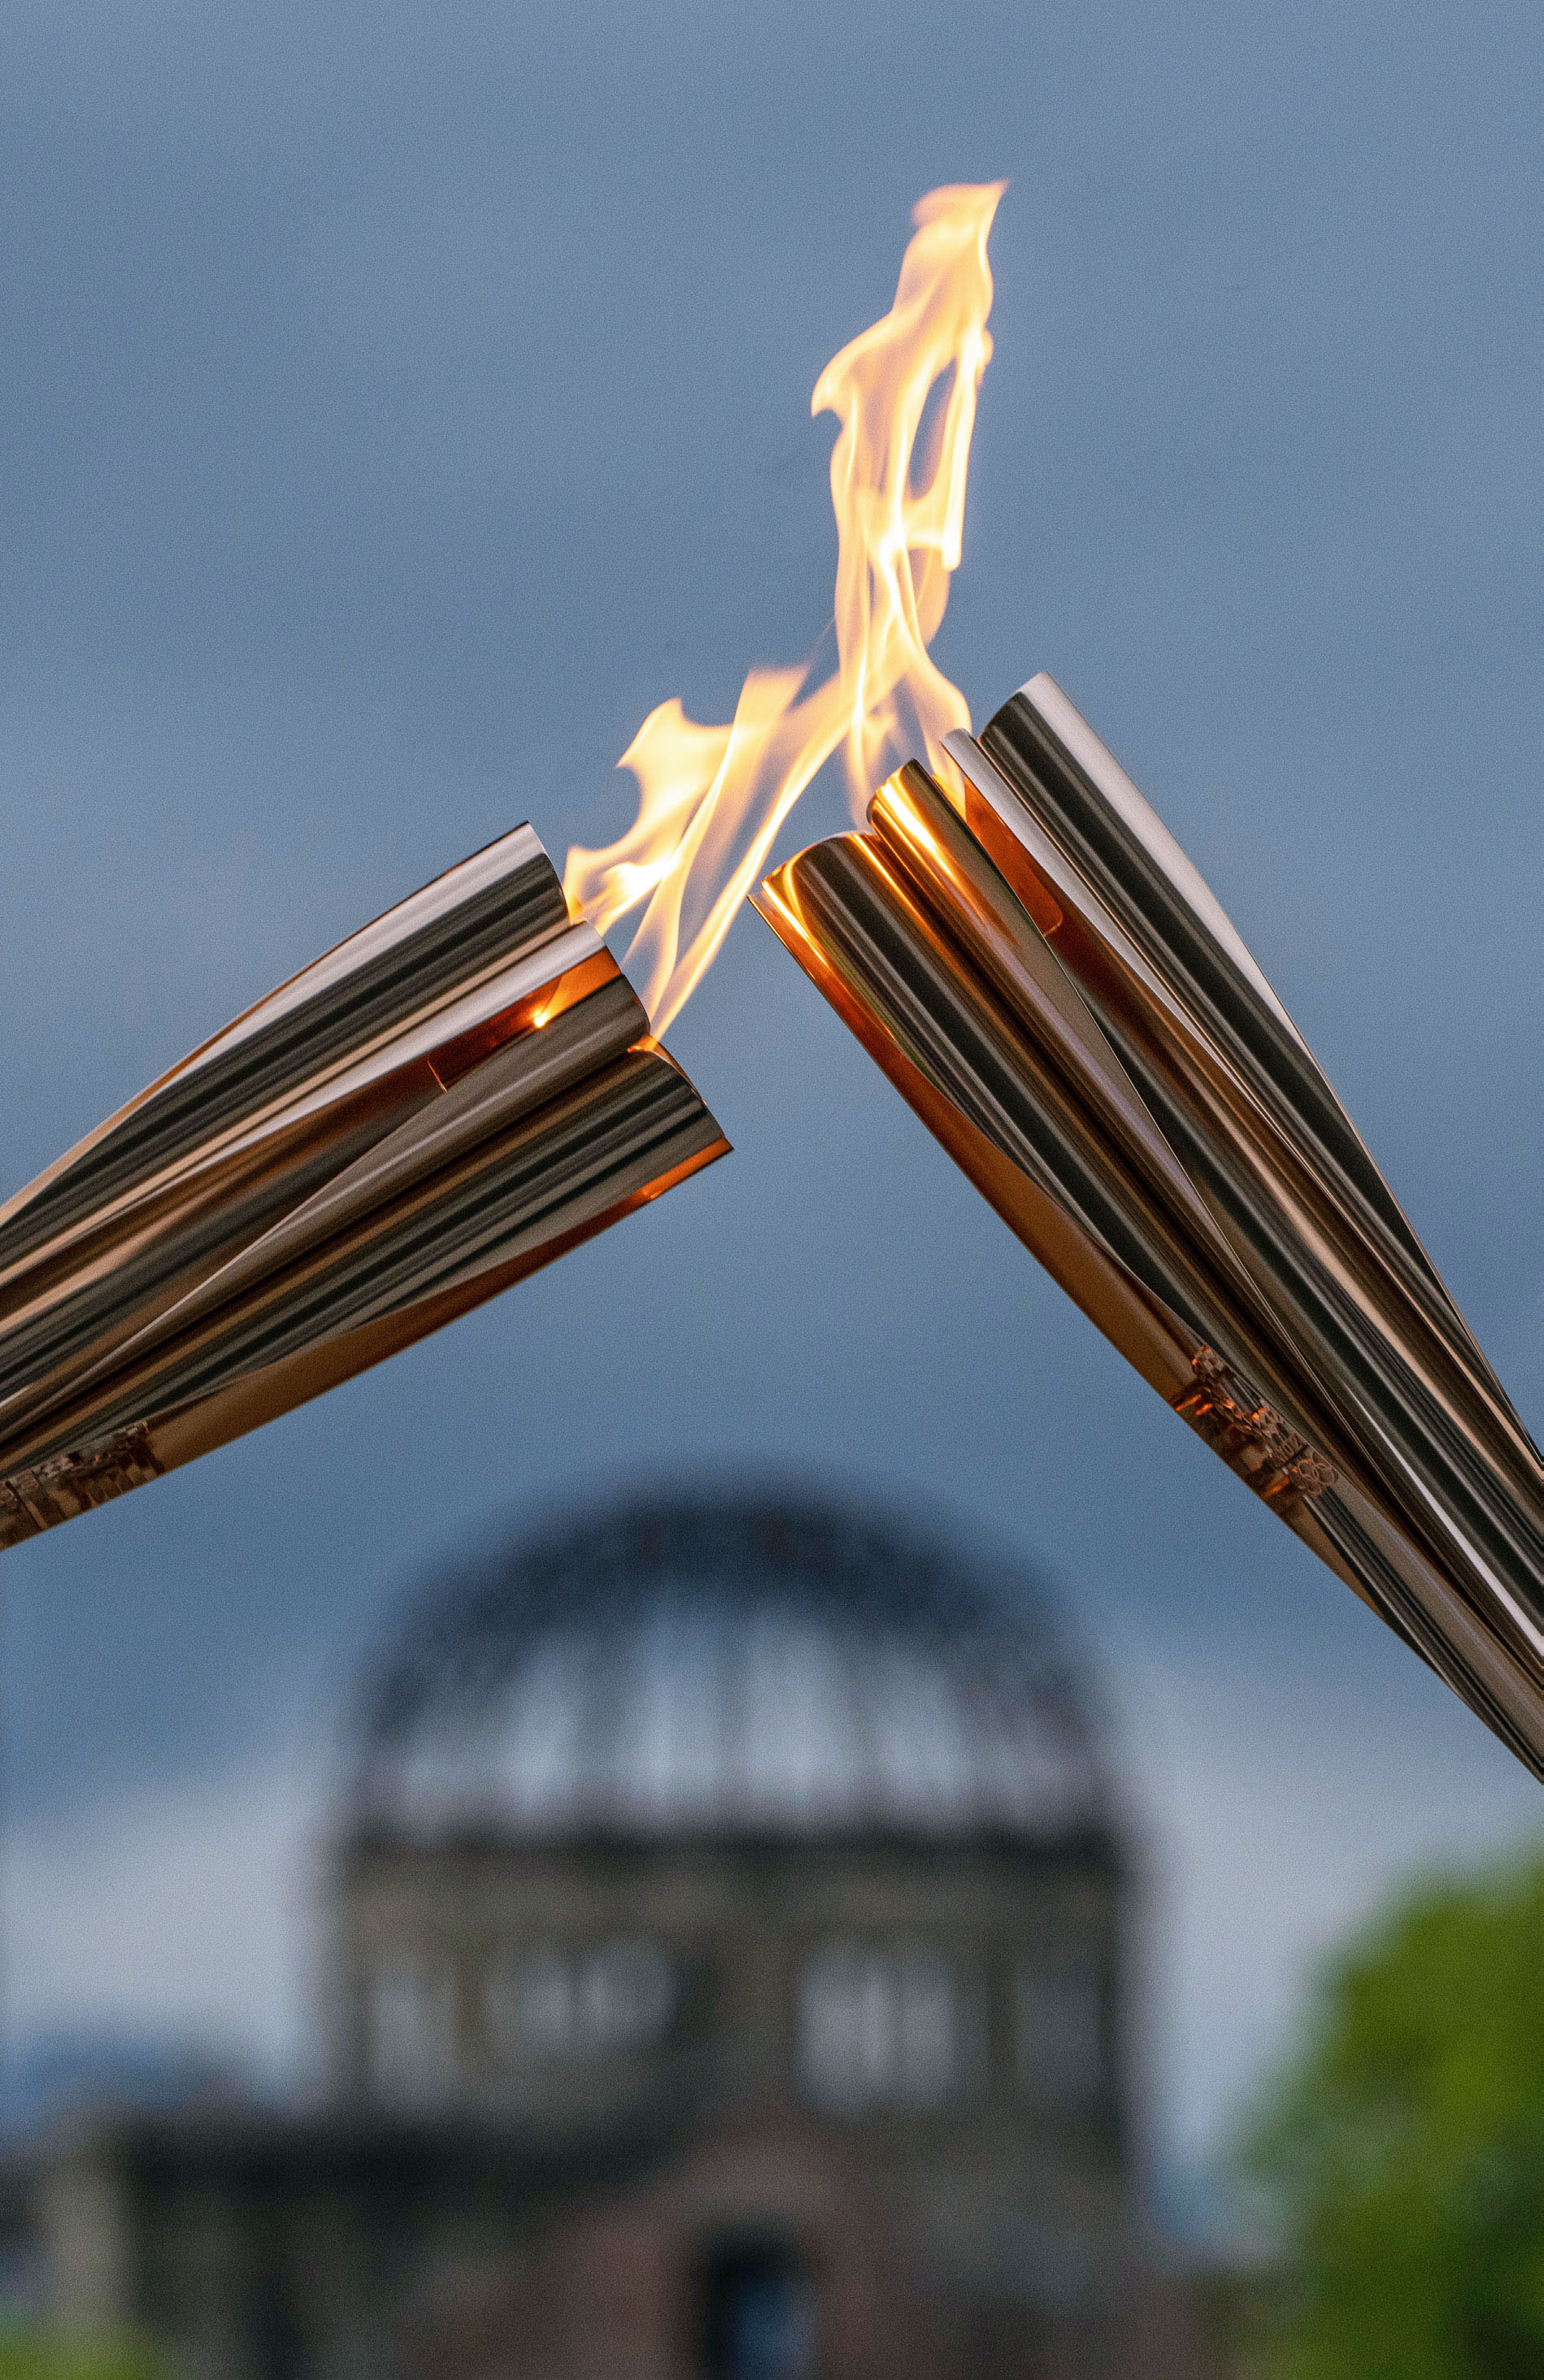 La flamme olympique illuminera le Morbihan le 6 juin 2024